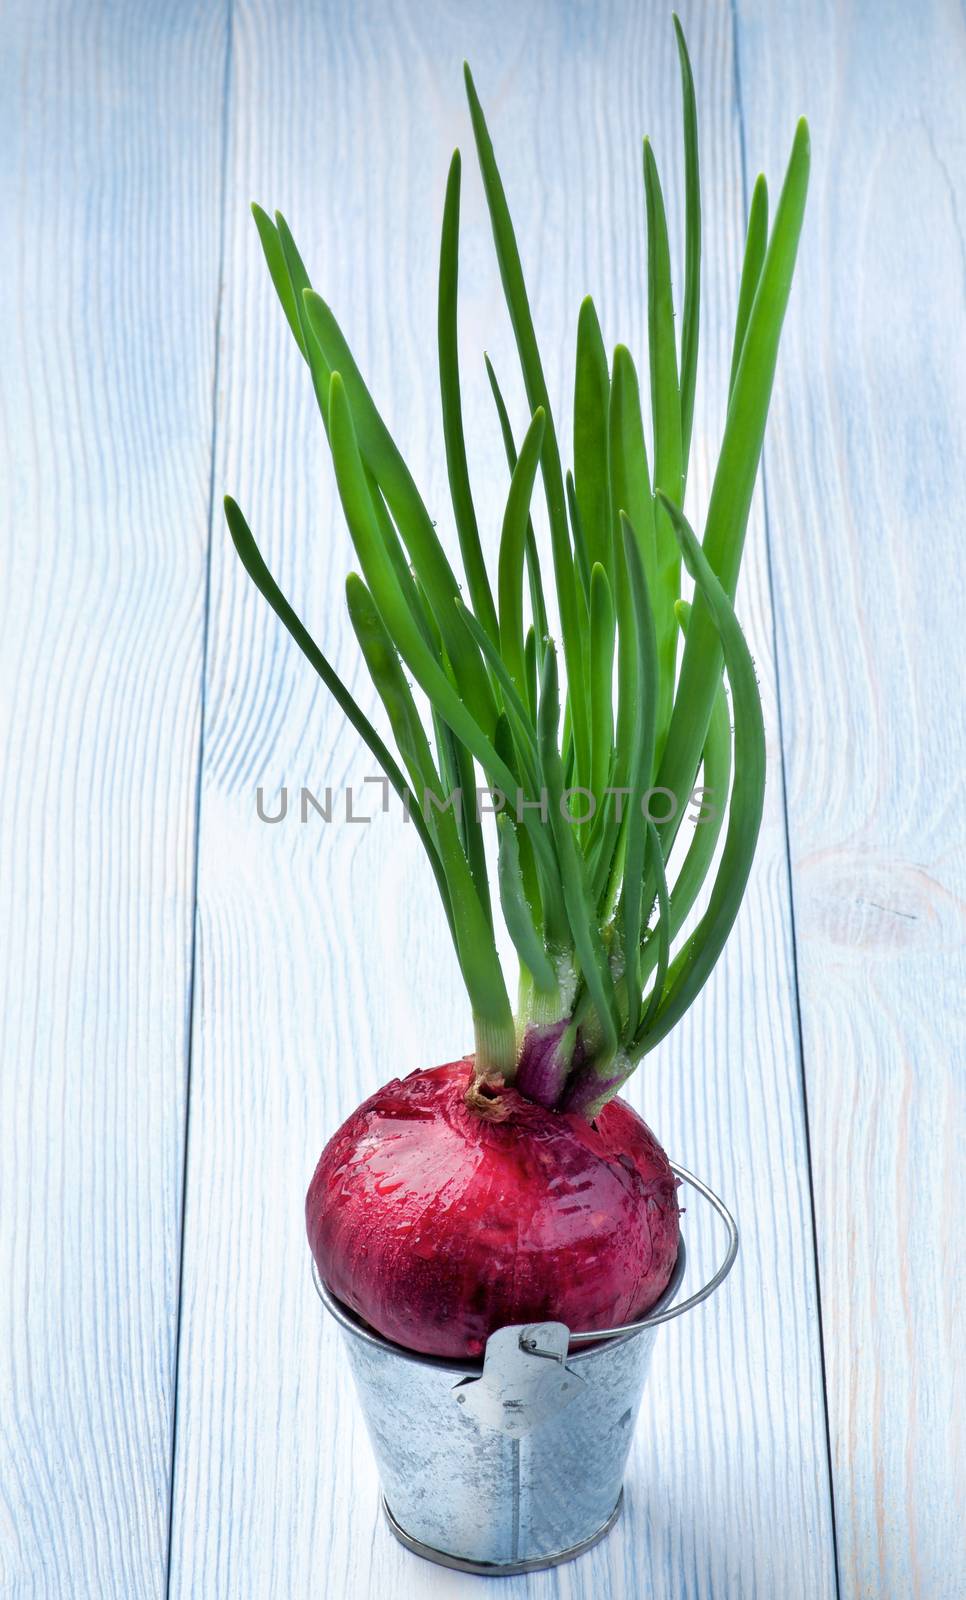 Spring Red Onion by zhekos